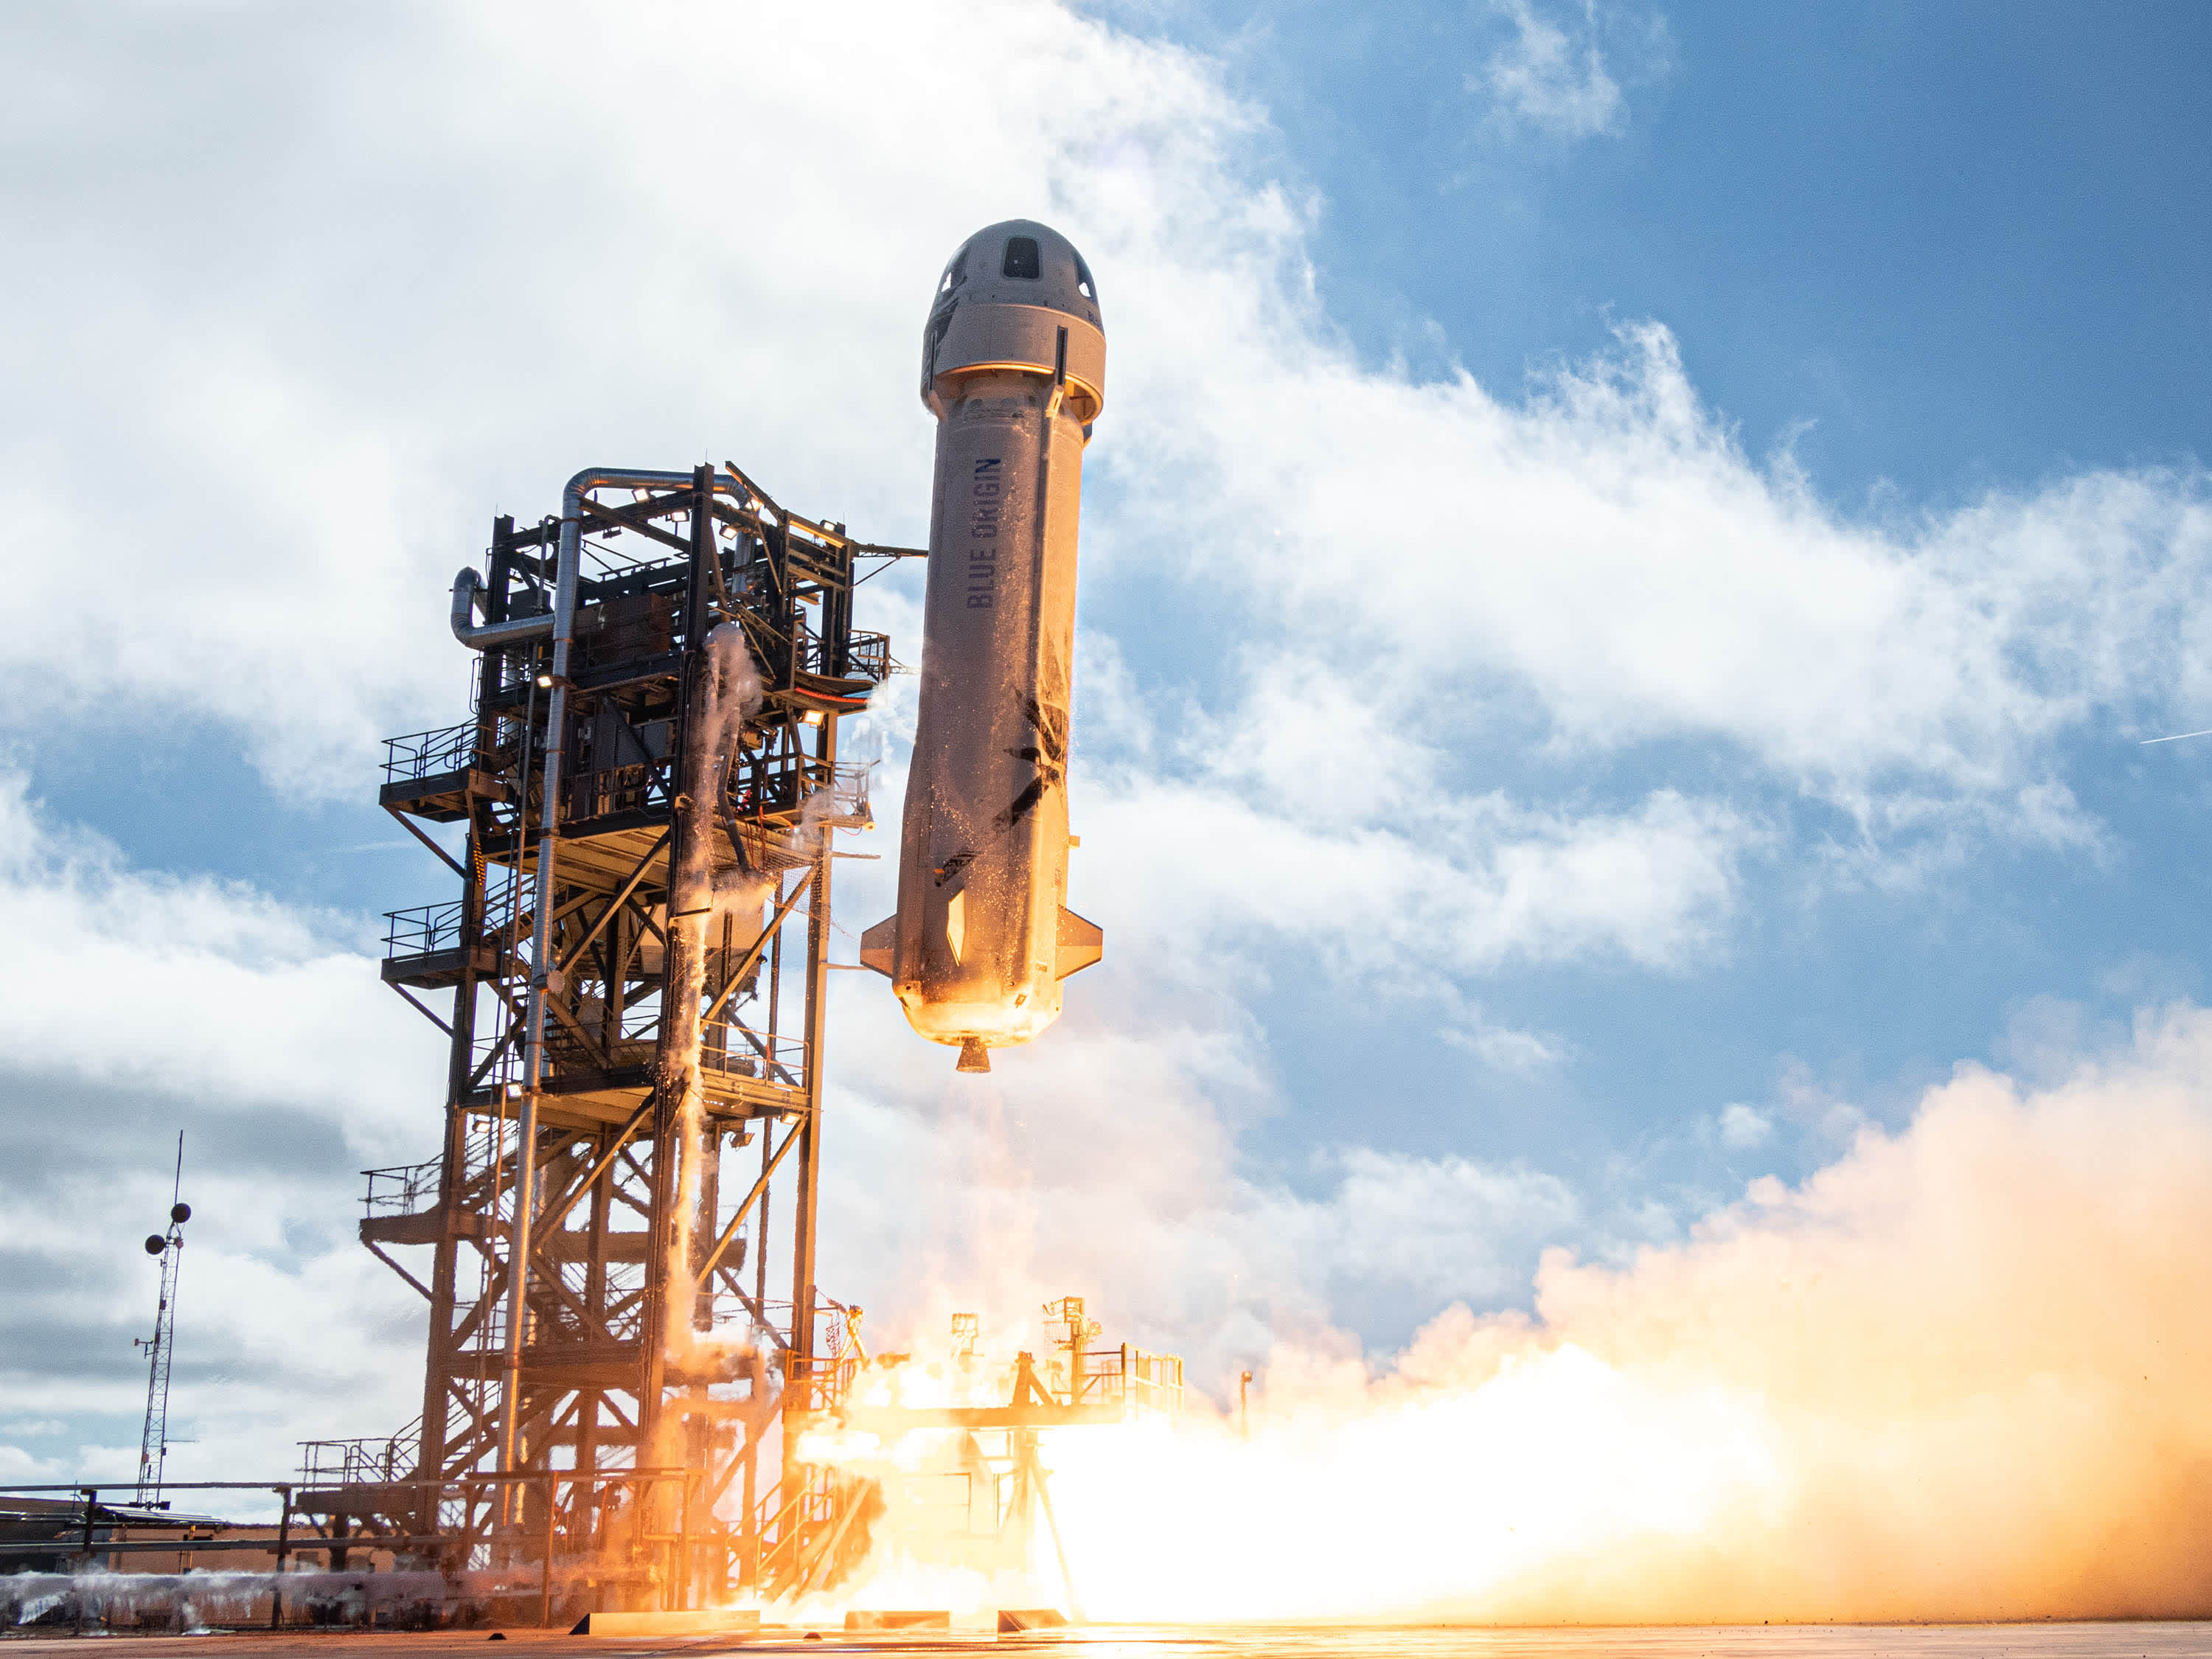 Jeff Bezos' Blue Origin auctions spaceflight seat for $28 million